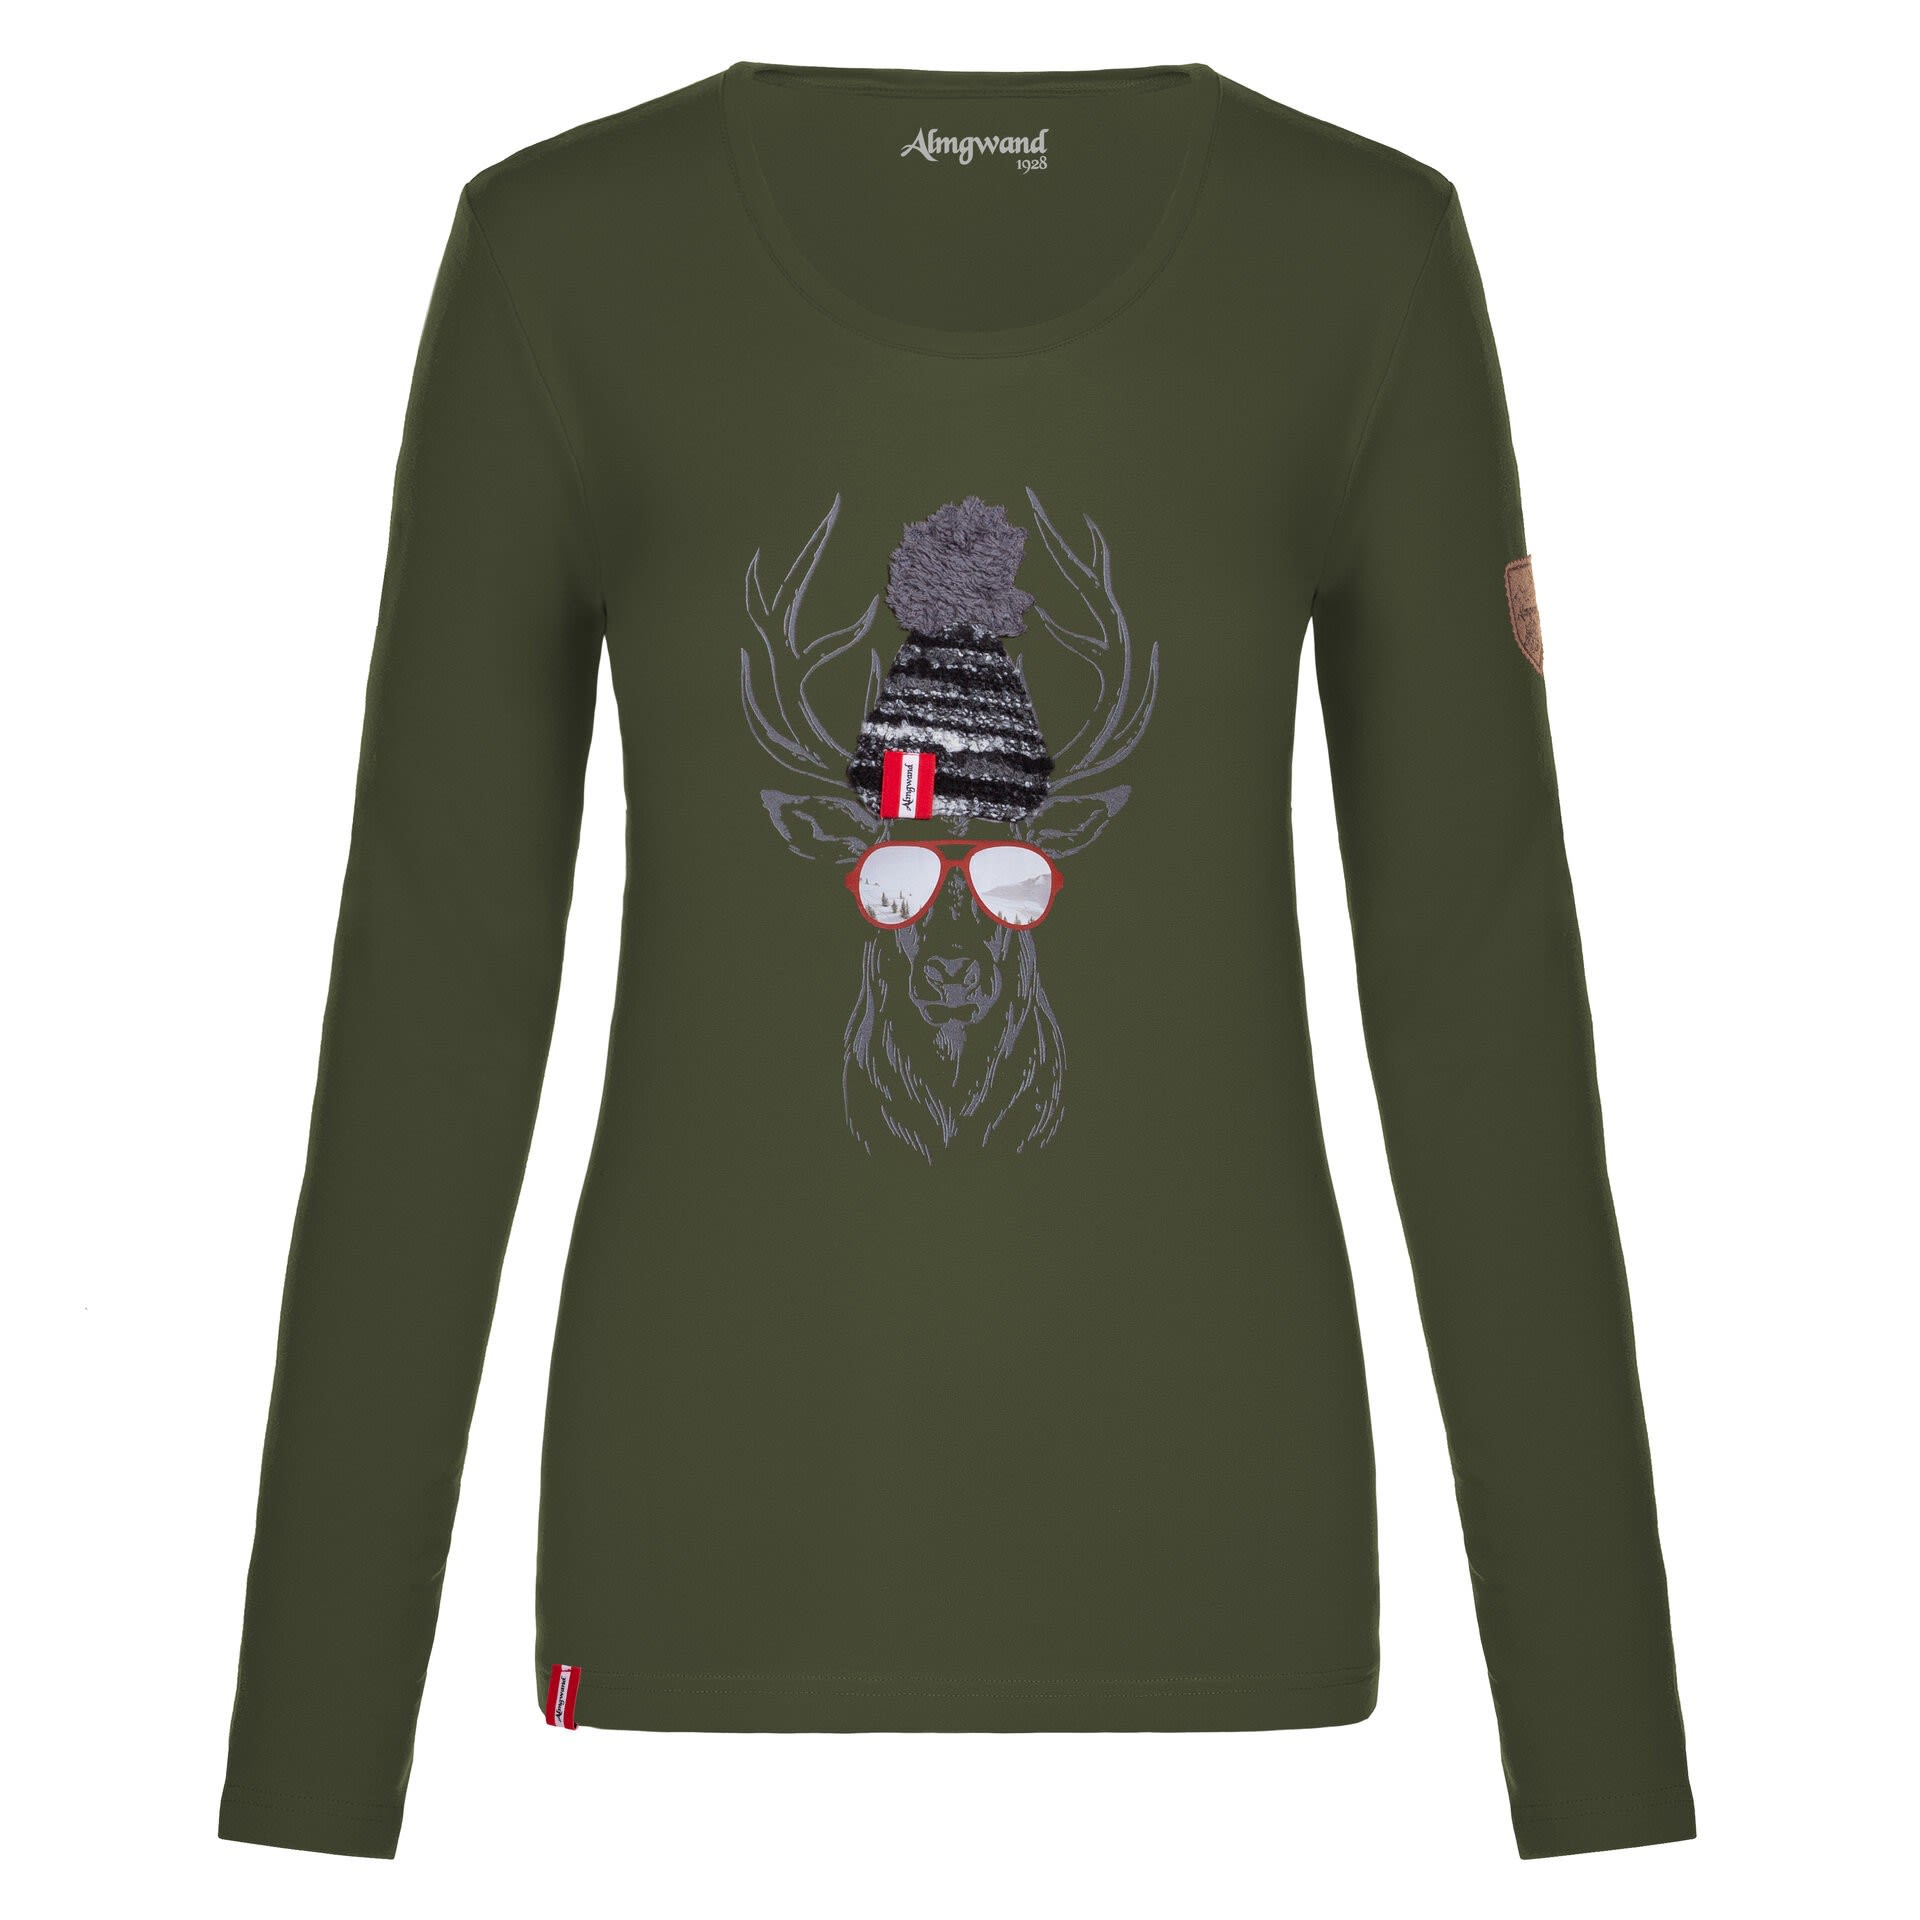 Almgwand Schareckalm Oliv, Female Langarm-Shirts, Größe XXL - Farbe Olive Green 32326AD-23